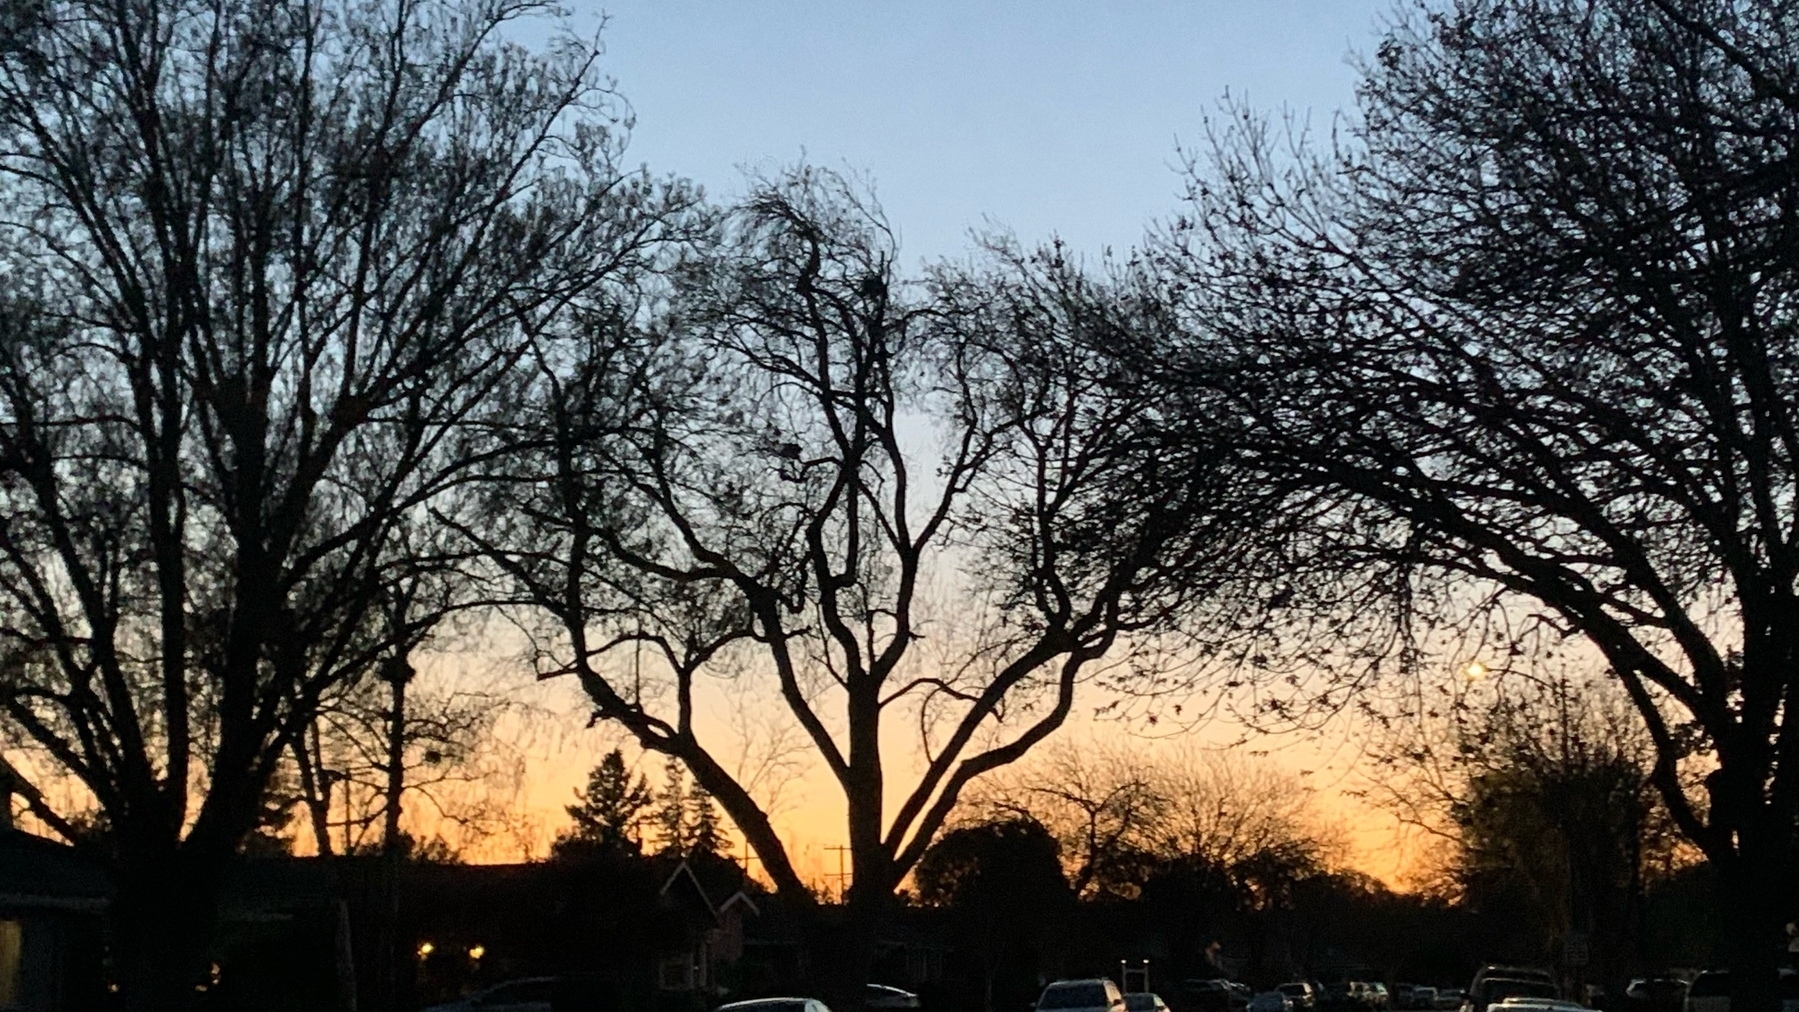 sunset seen through street trees silhouettes